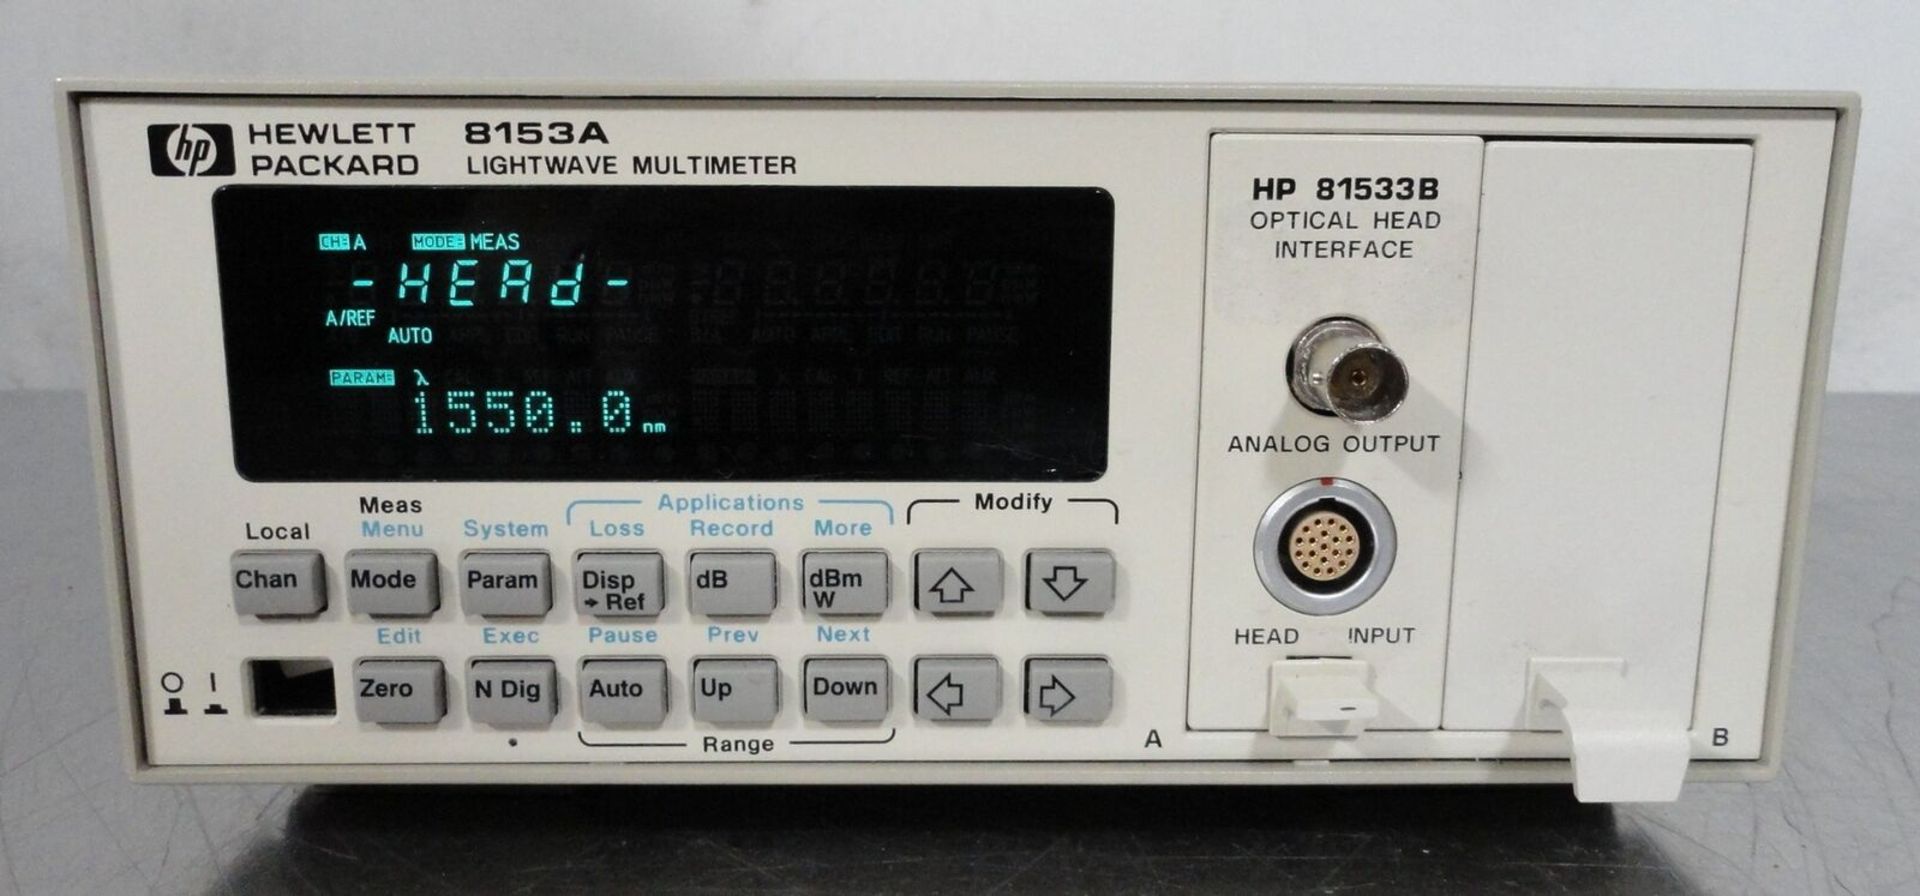 HP 8153A Lightwave Multimeter w/ 1x 81533B Optical Head Interface - Gilroy - Image 2 of 6